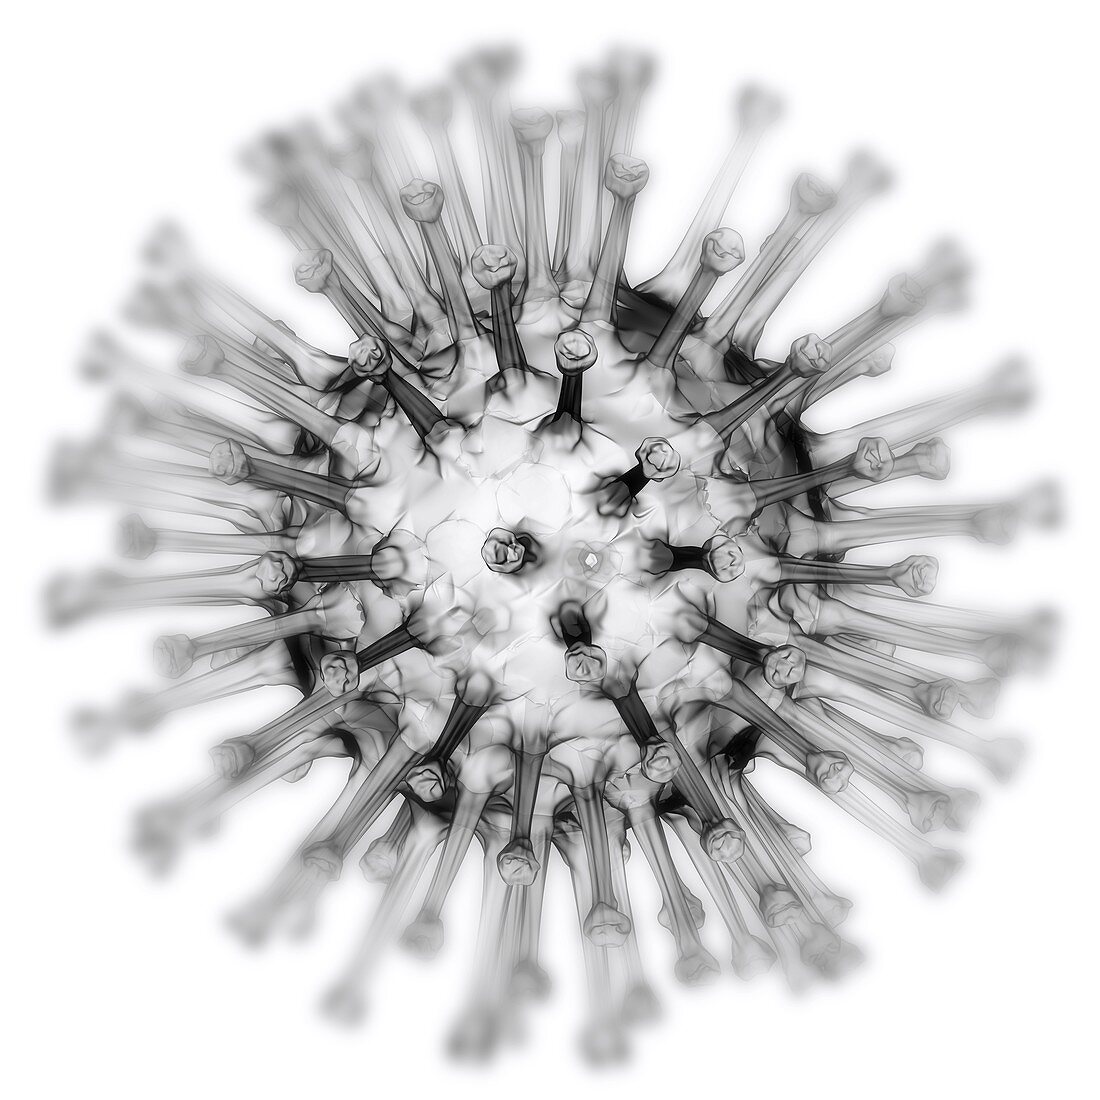 H1N1 flu virus particle,artwork